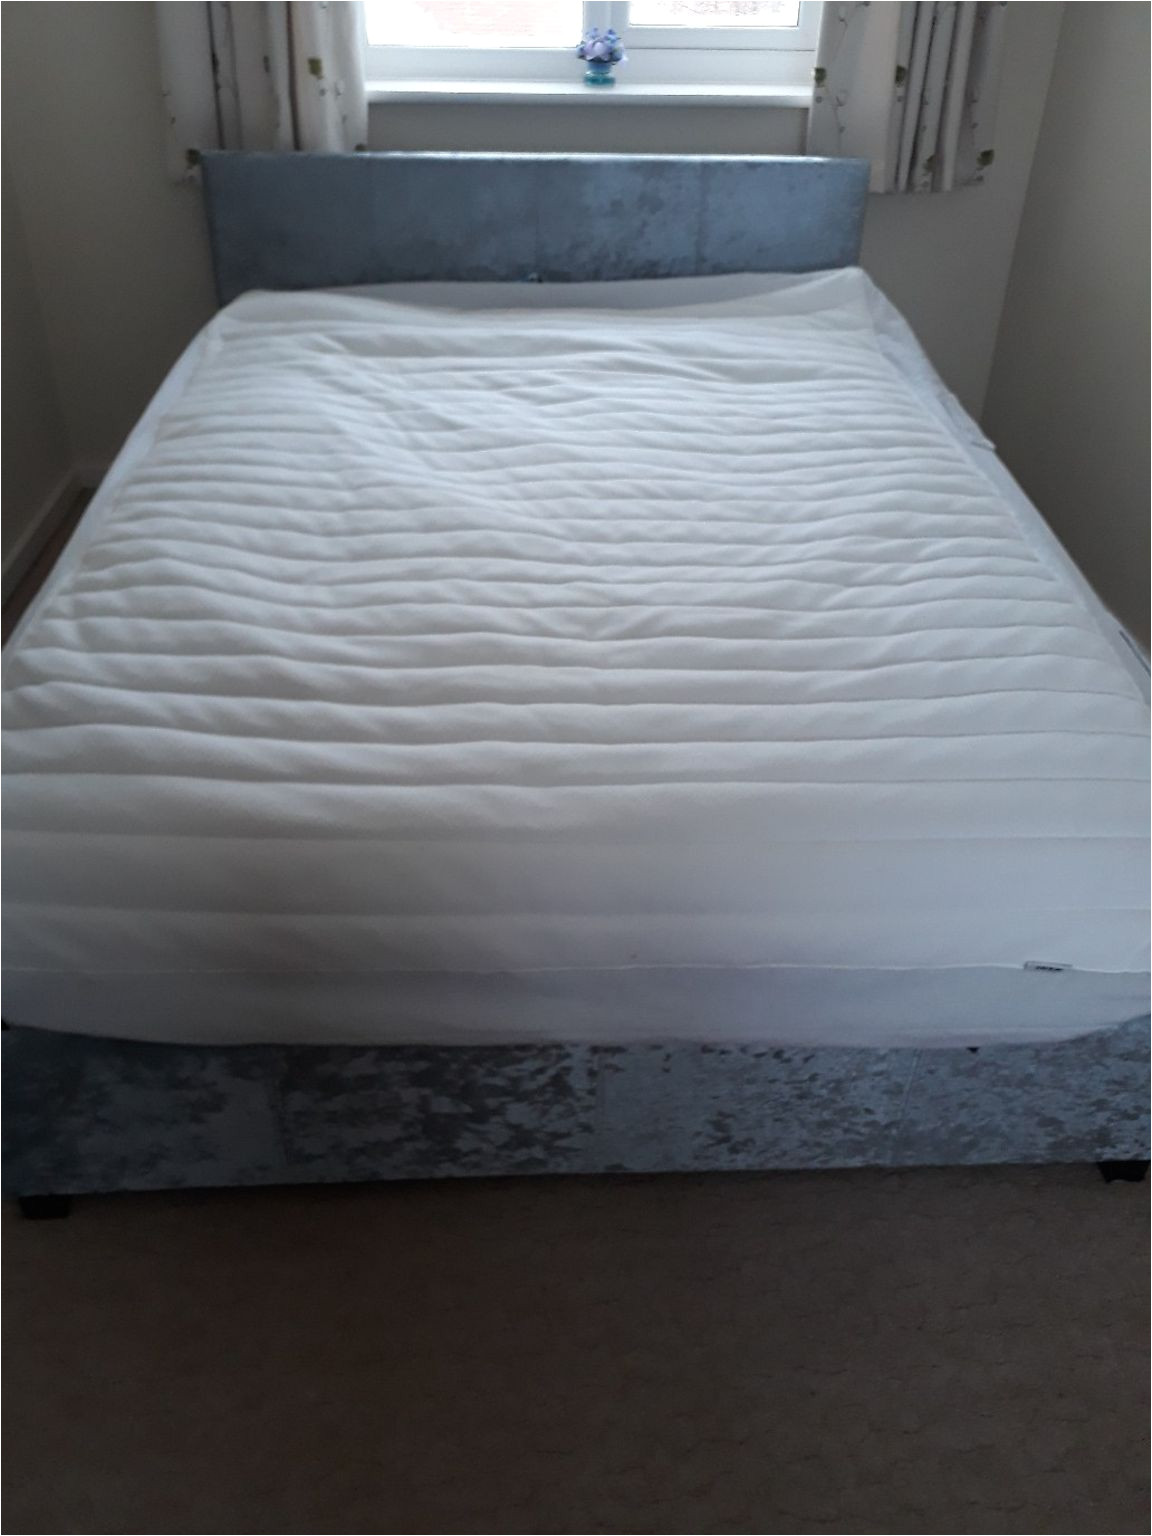 ikea double mattress washable cover jpg